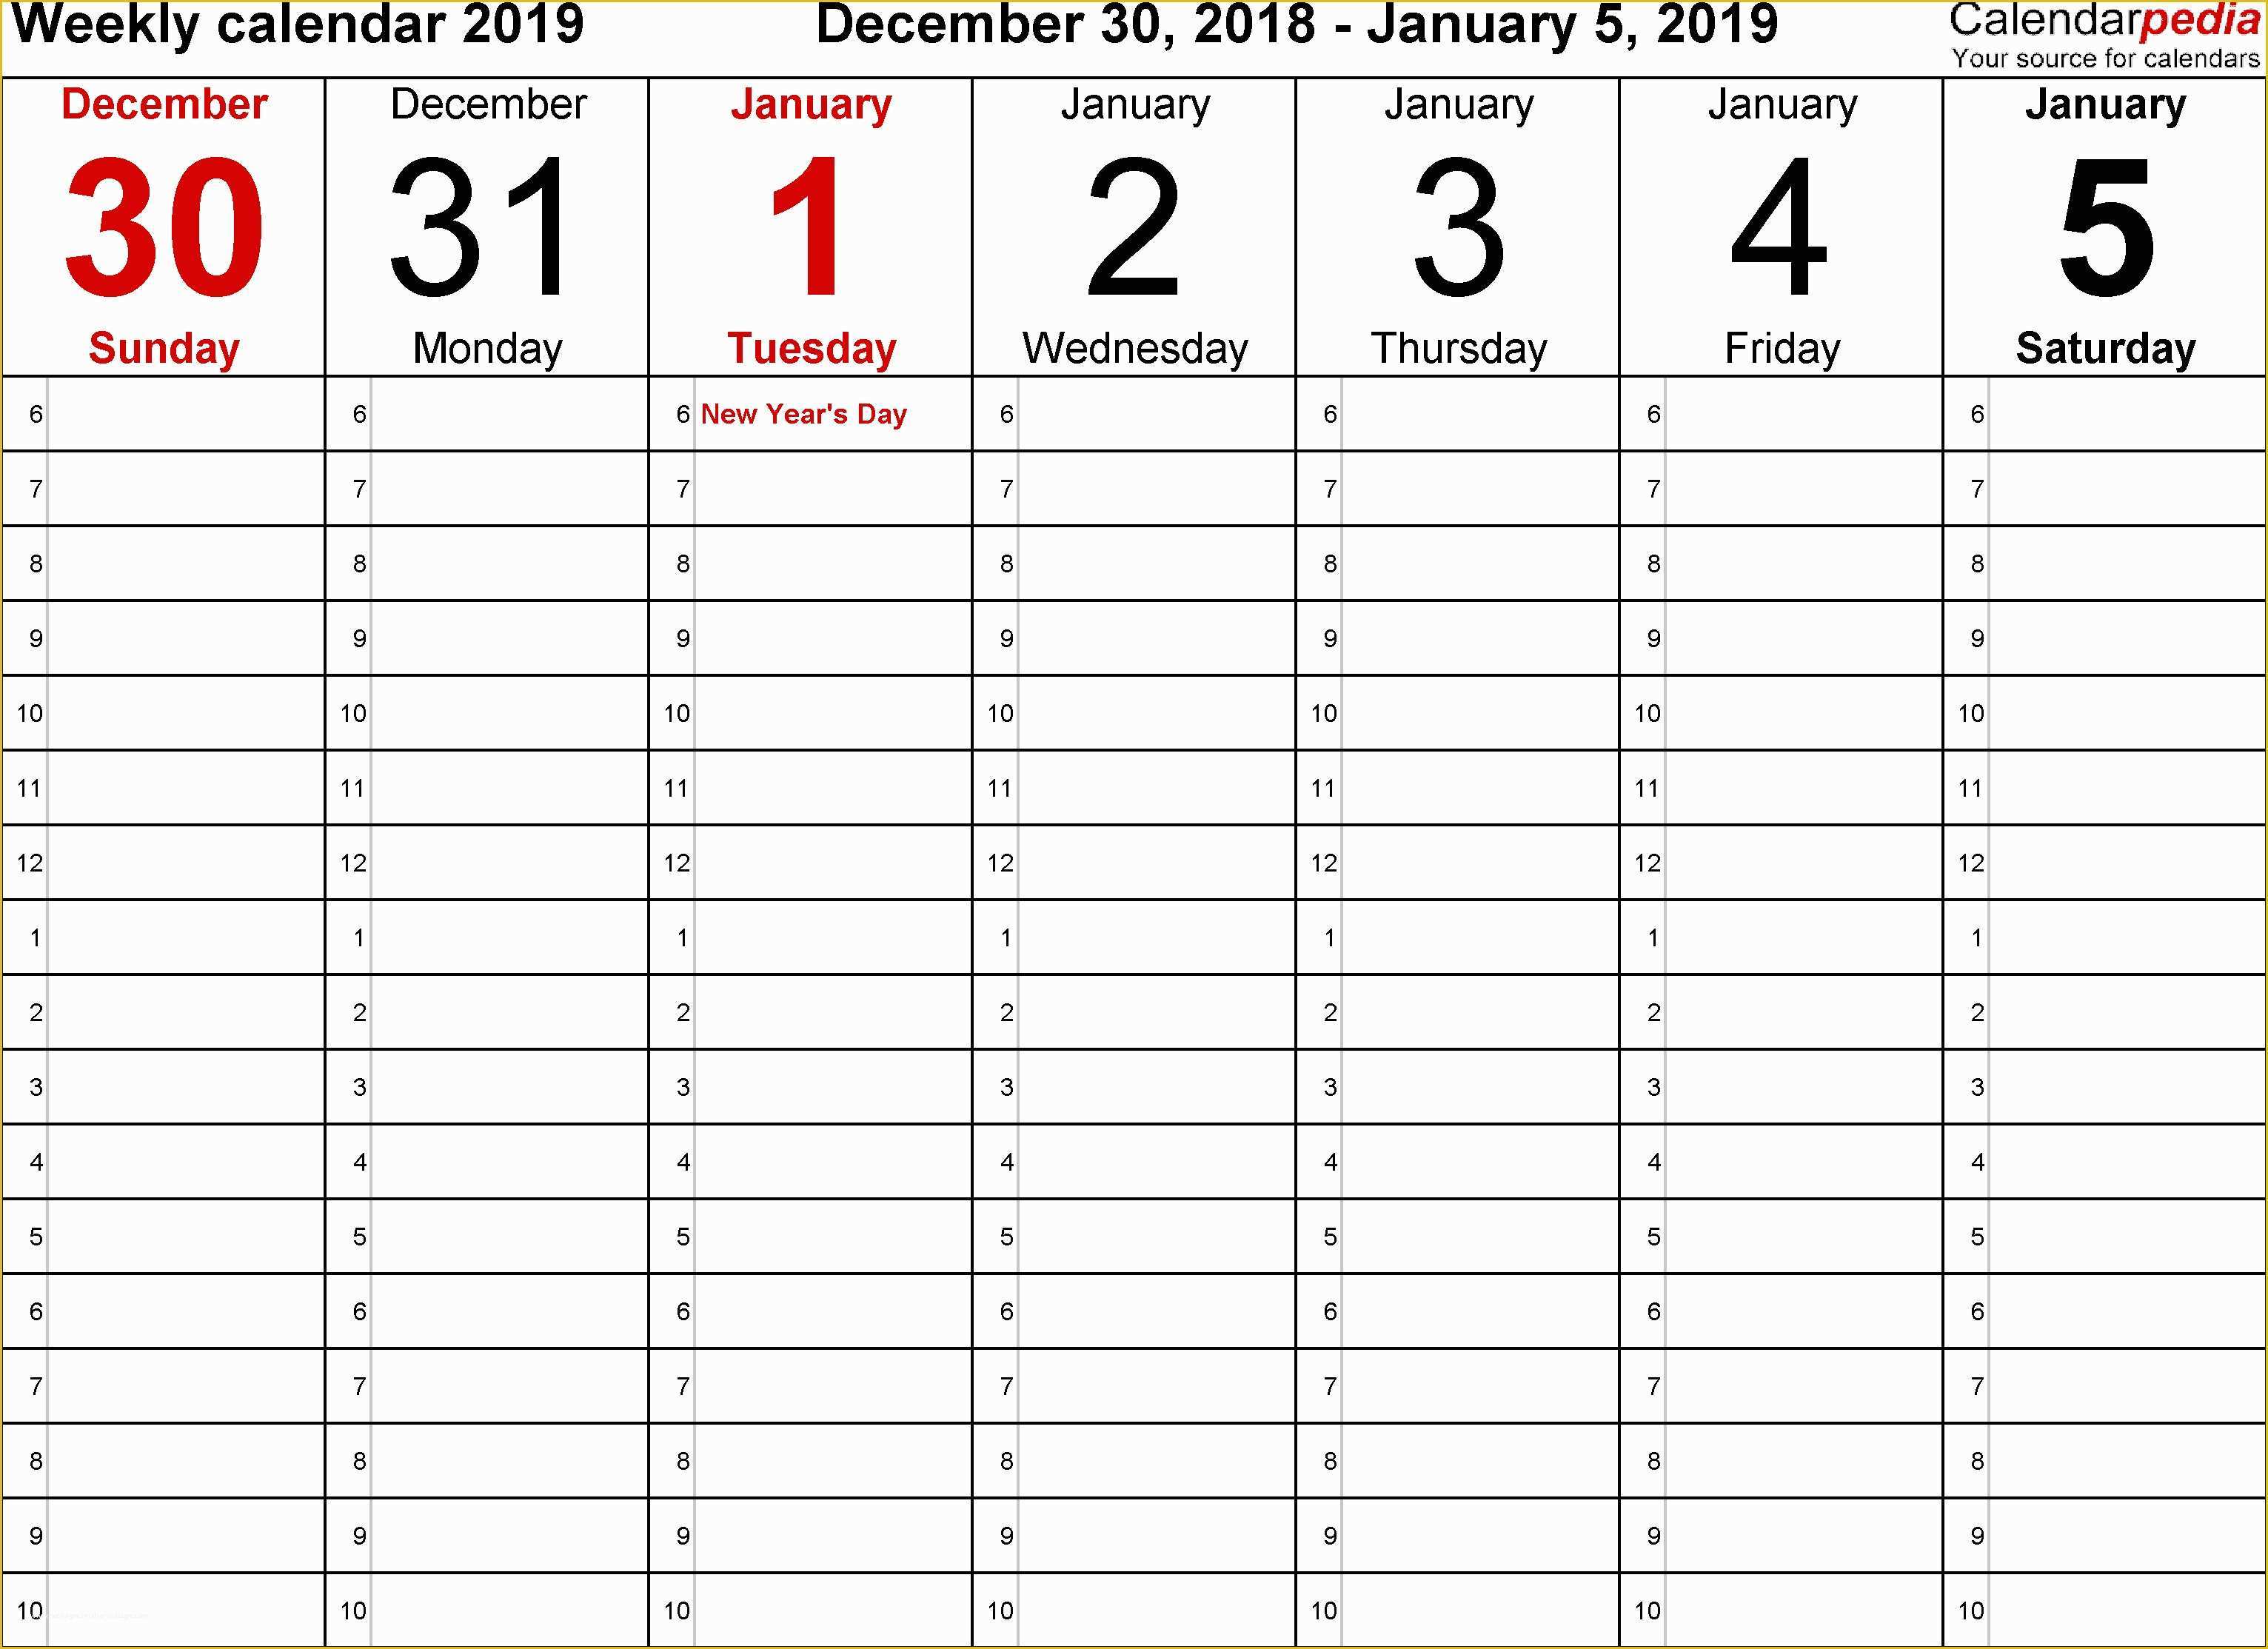 Free Google Sheets Templates Of Google Sheets Calendar Template 2019 2019 Calendar